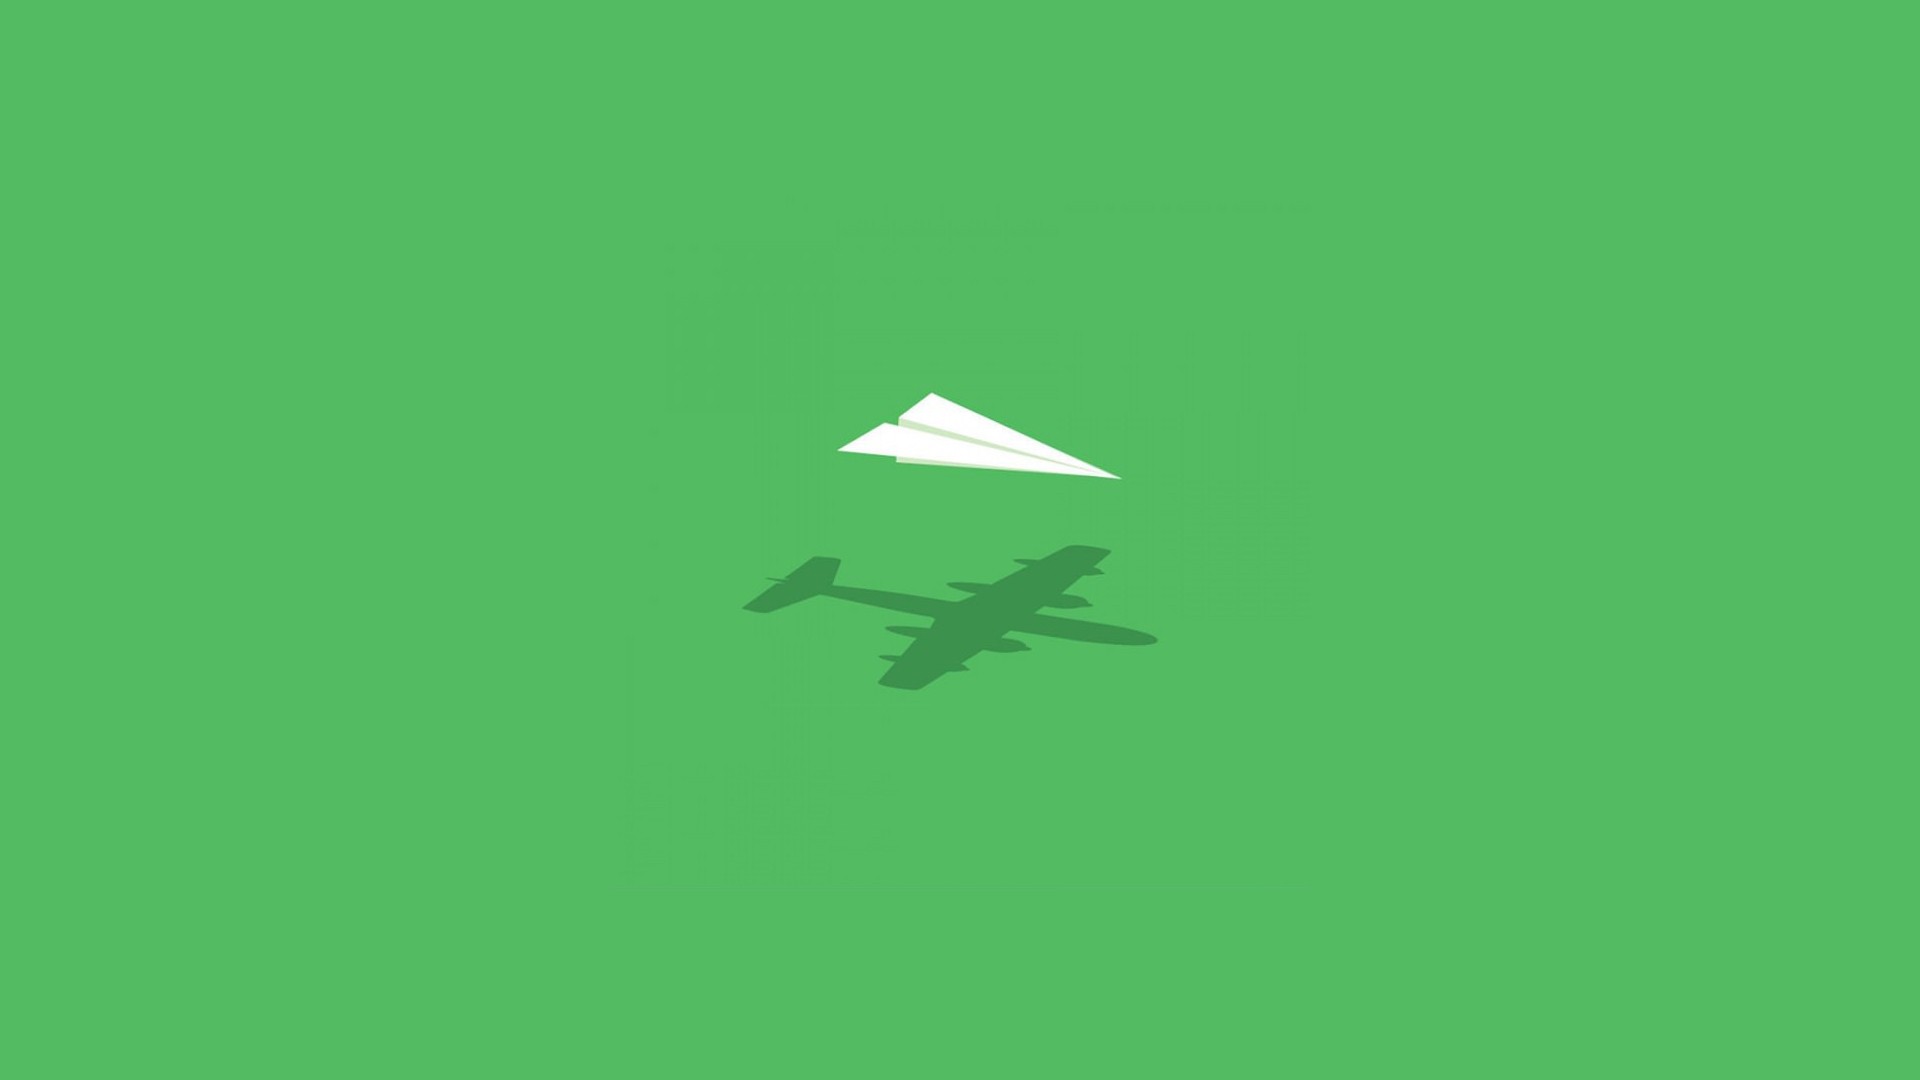 Wallpaper Paper airplane imagination